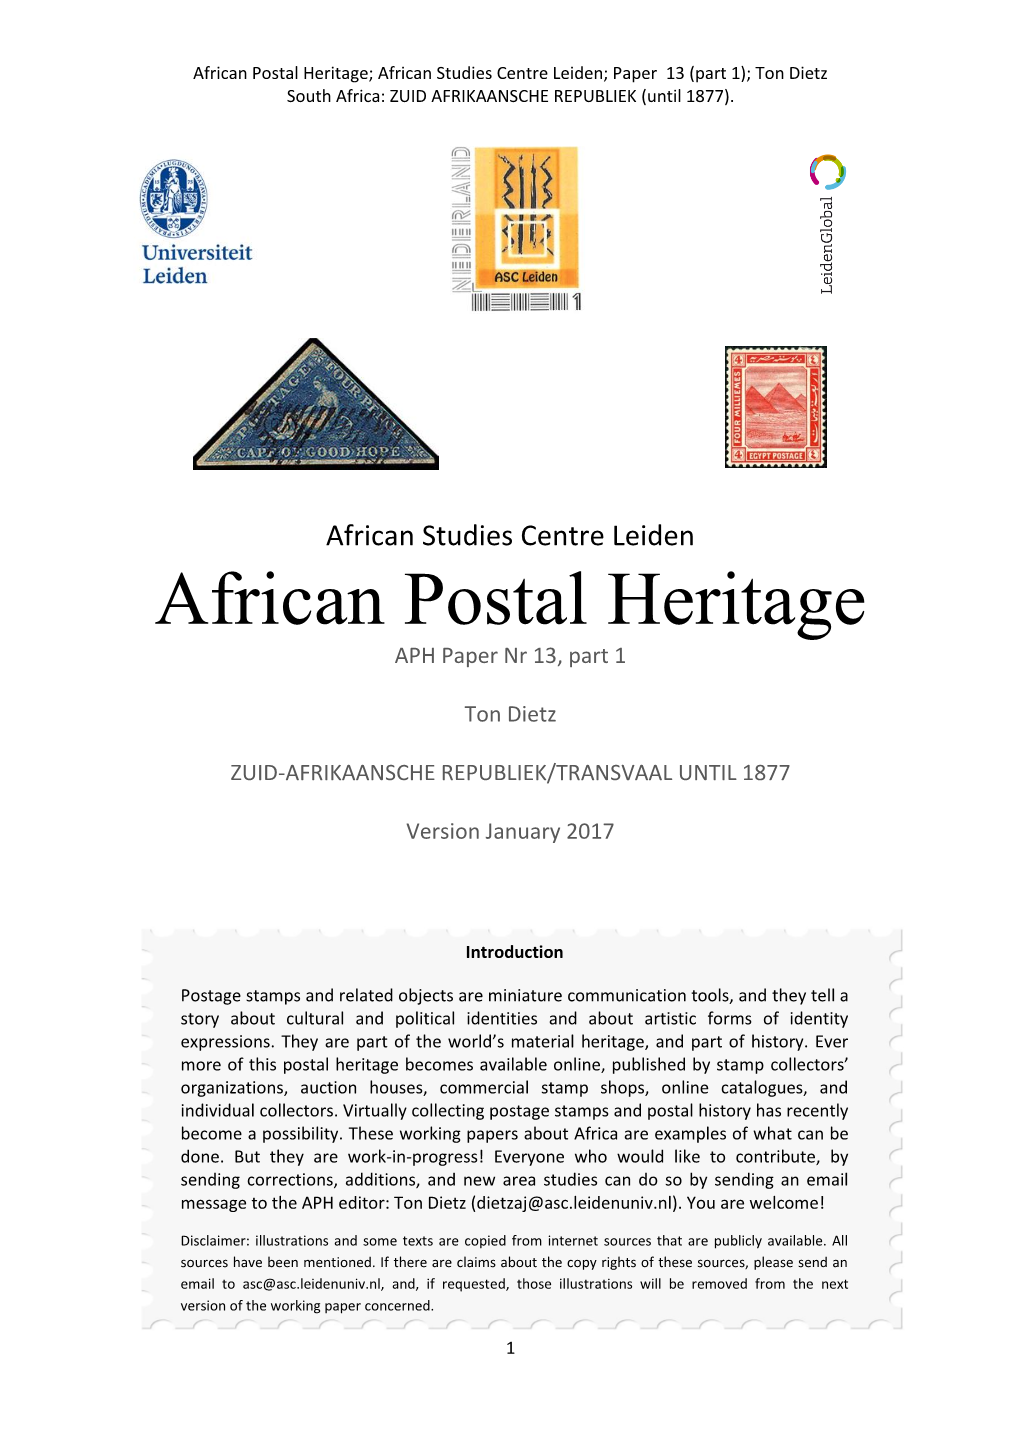 African Postal Heritage; African Studies Centre Leiden; Paper 13 (Part 1); Ton Dietz South Africa: ZUID AFRIKAANSCHE REPUBLIEK (Until 1877)